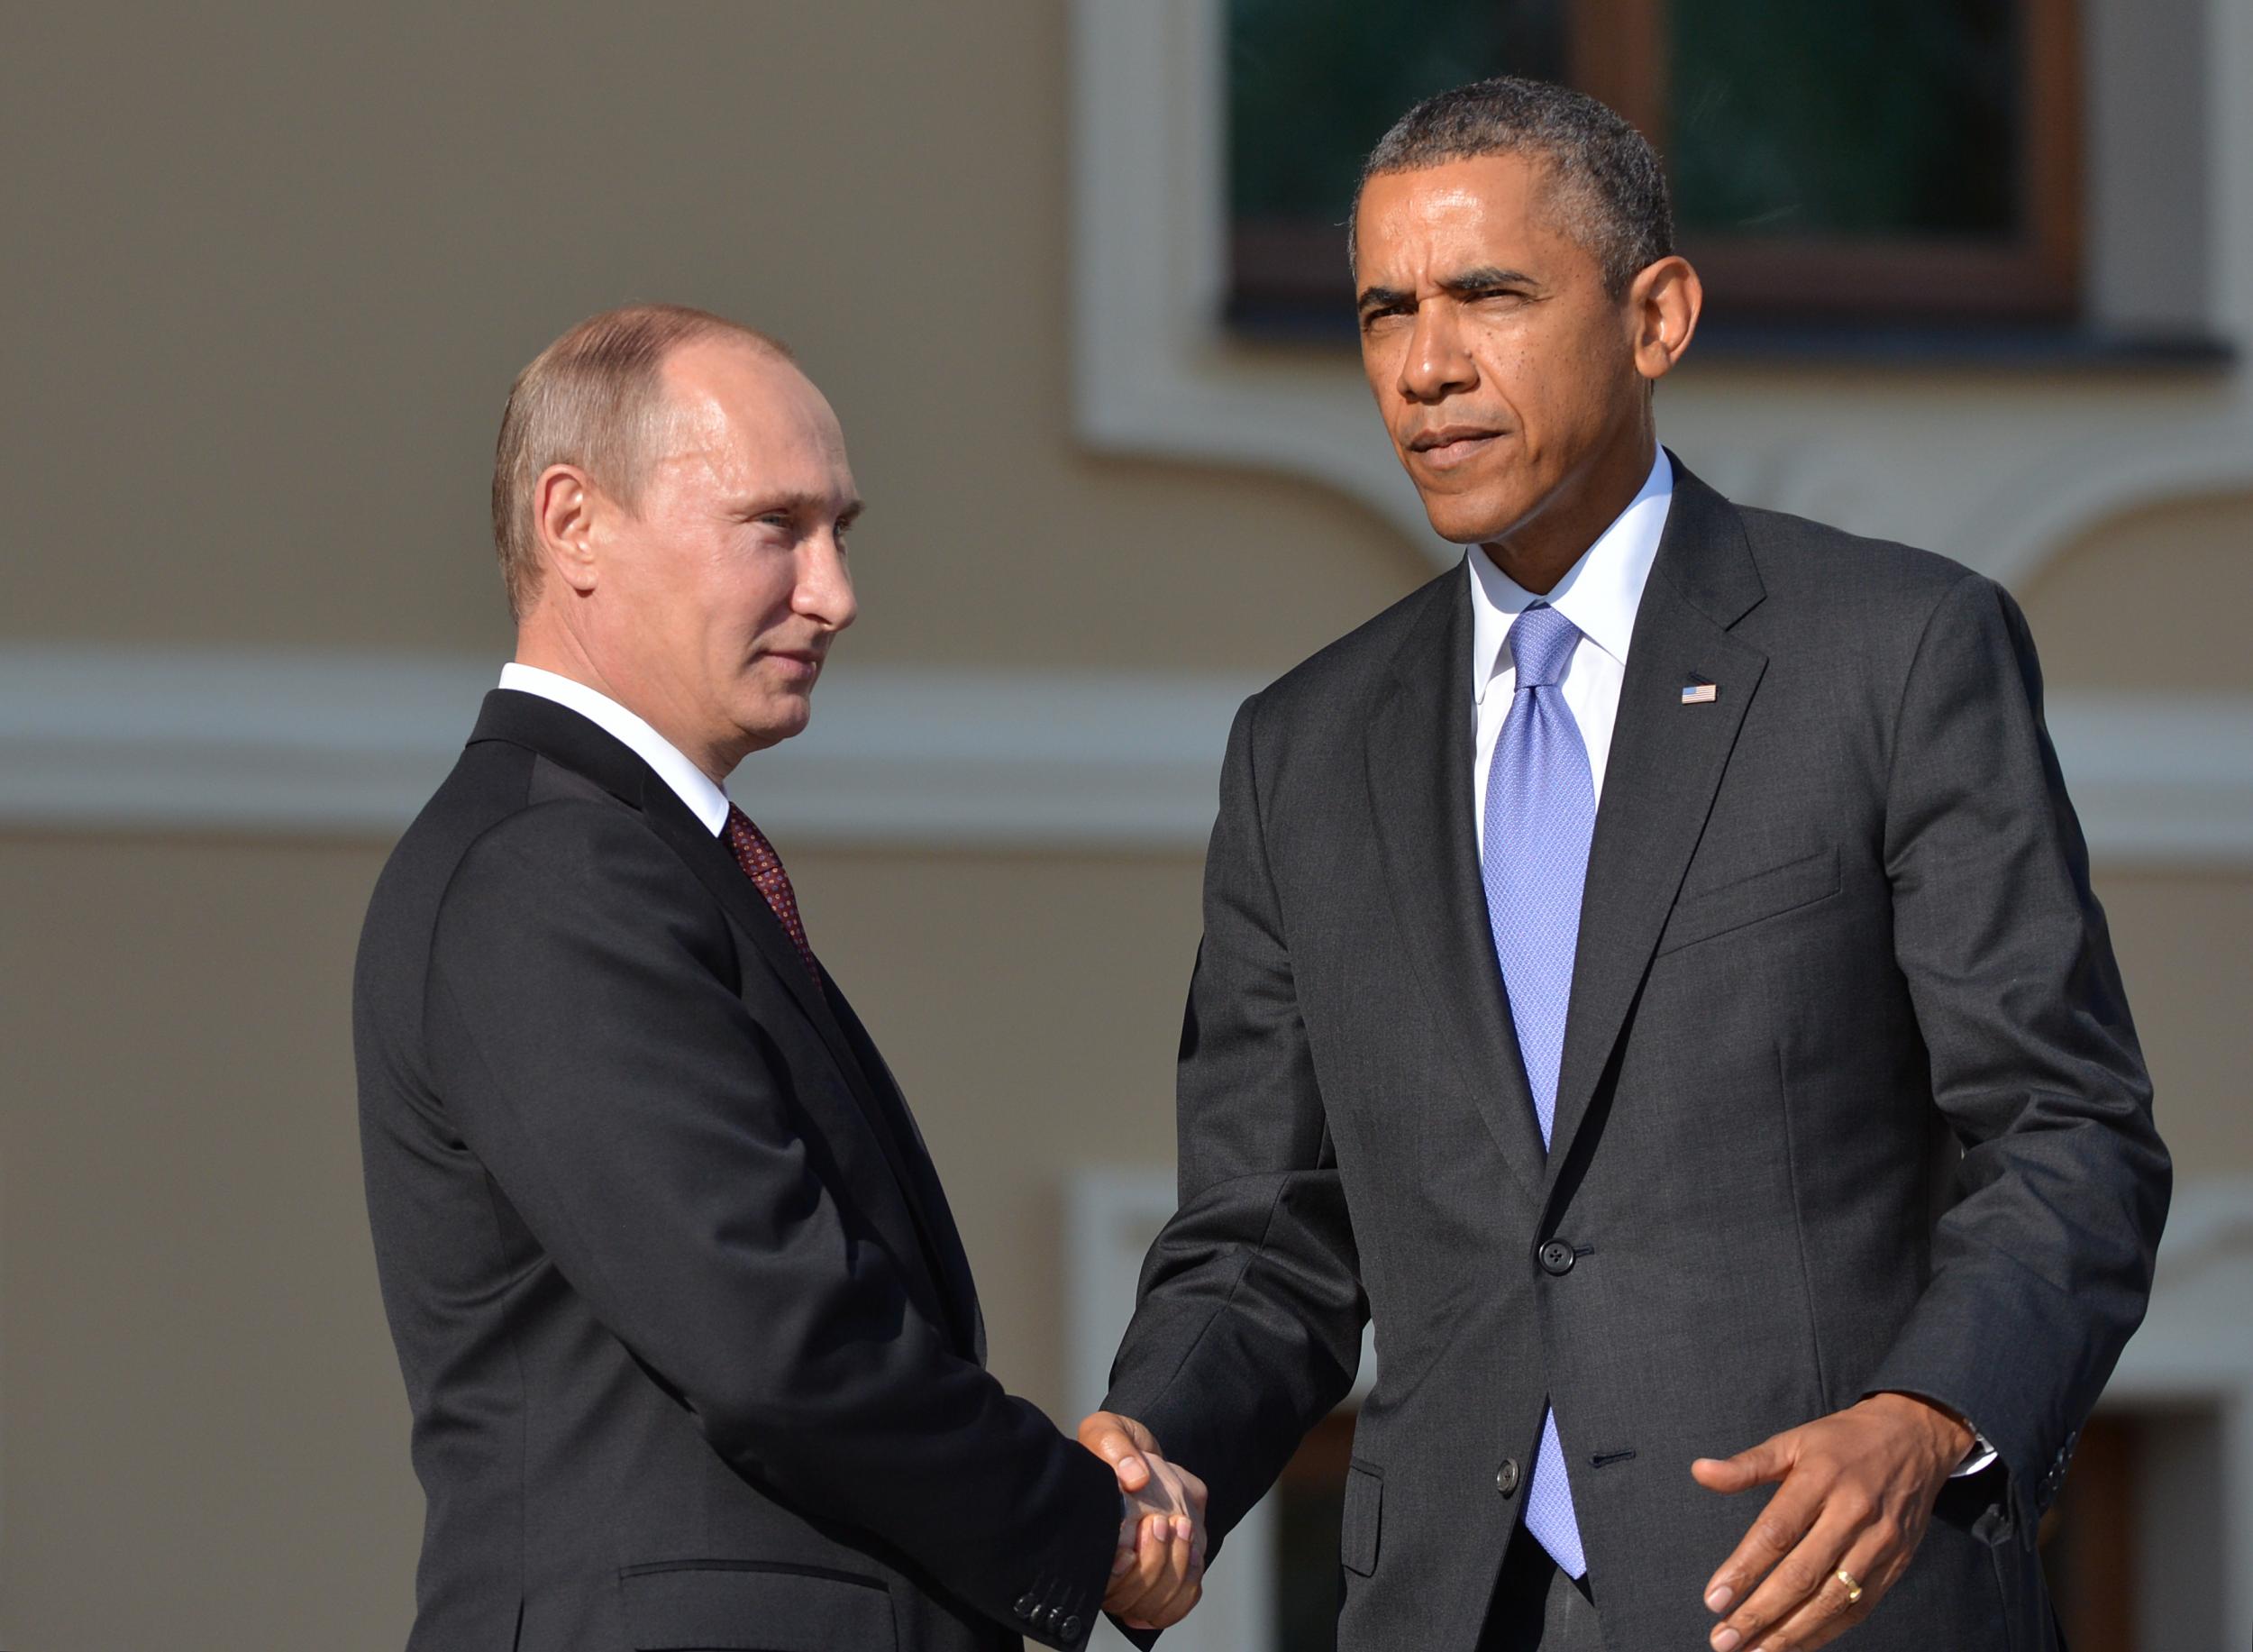 Vladimir Putin and Barack Obama shake hands at the 2013 G20 summit in St Petersburg, Russia